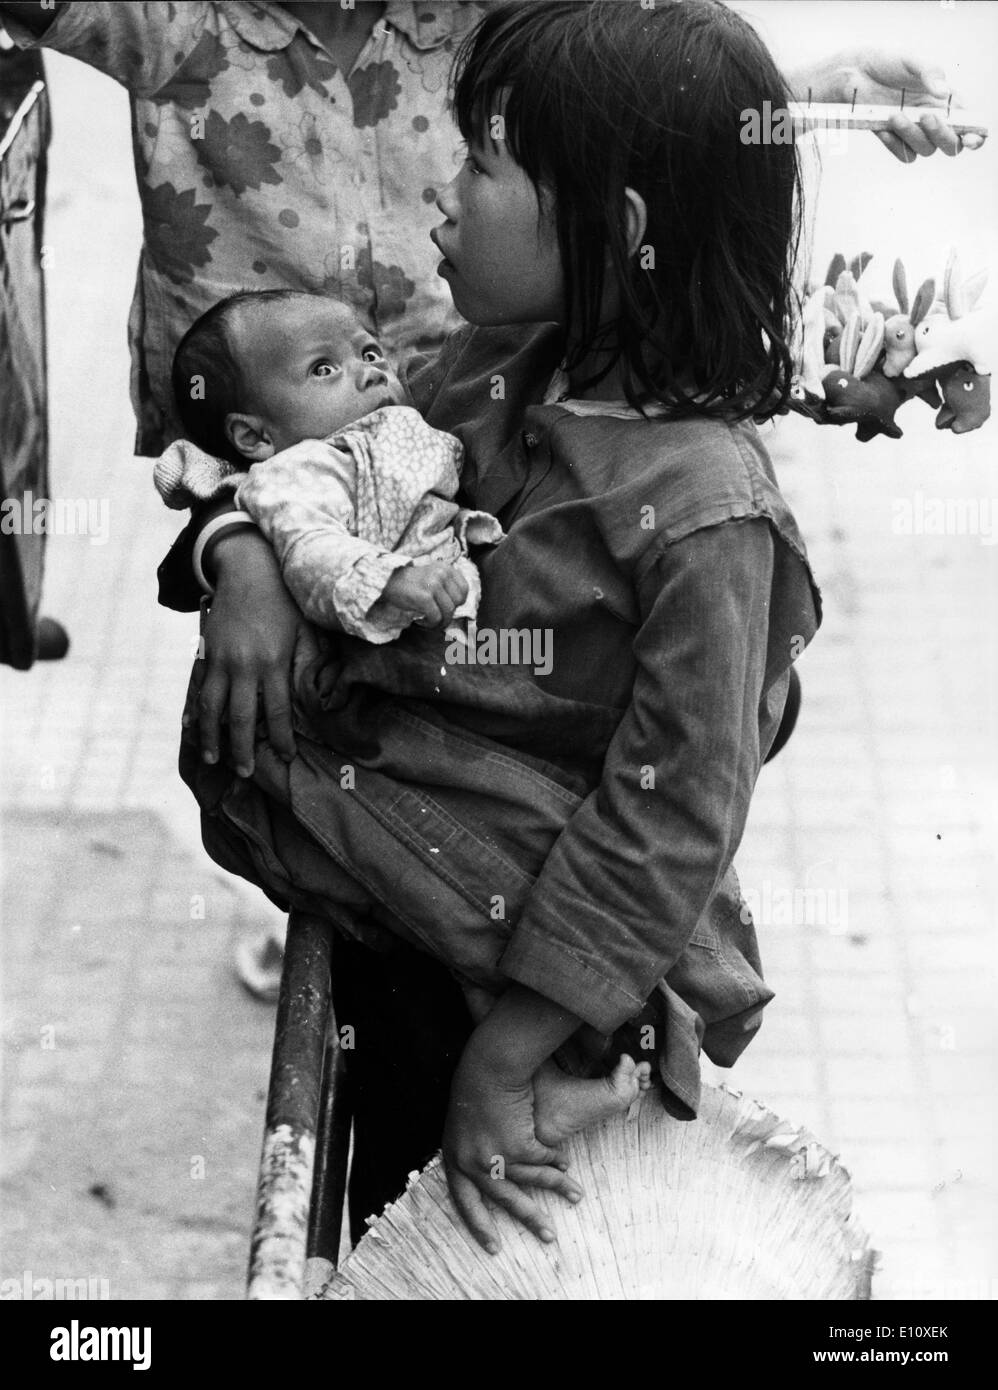 Bambino mendicante durante la guerra del Vietnam Foto Stock